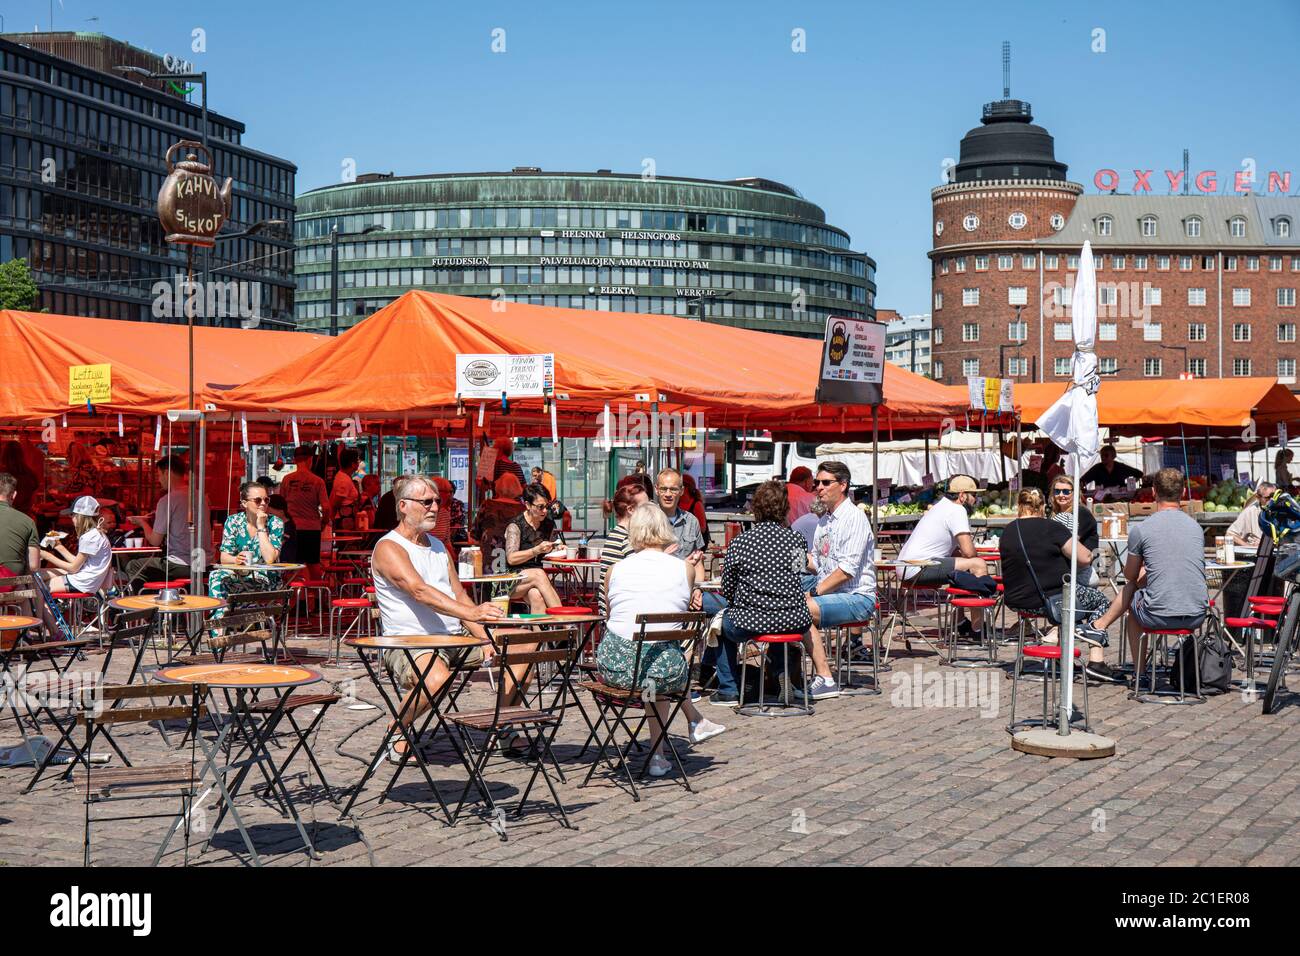 People enjoying cafe at Hakaniemi market square outdoor café in Helsinki, Finland Stock Photo